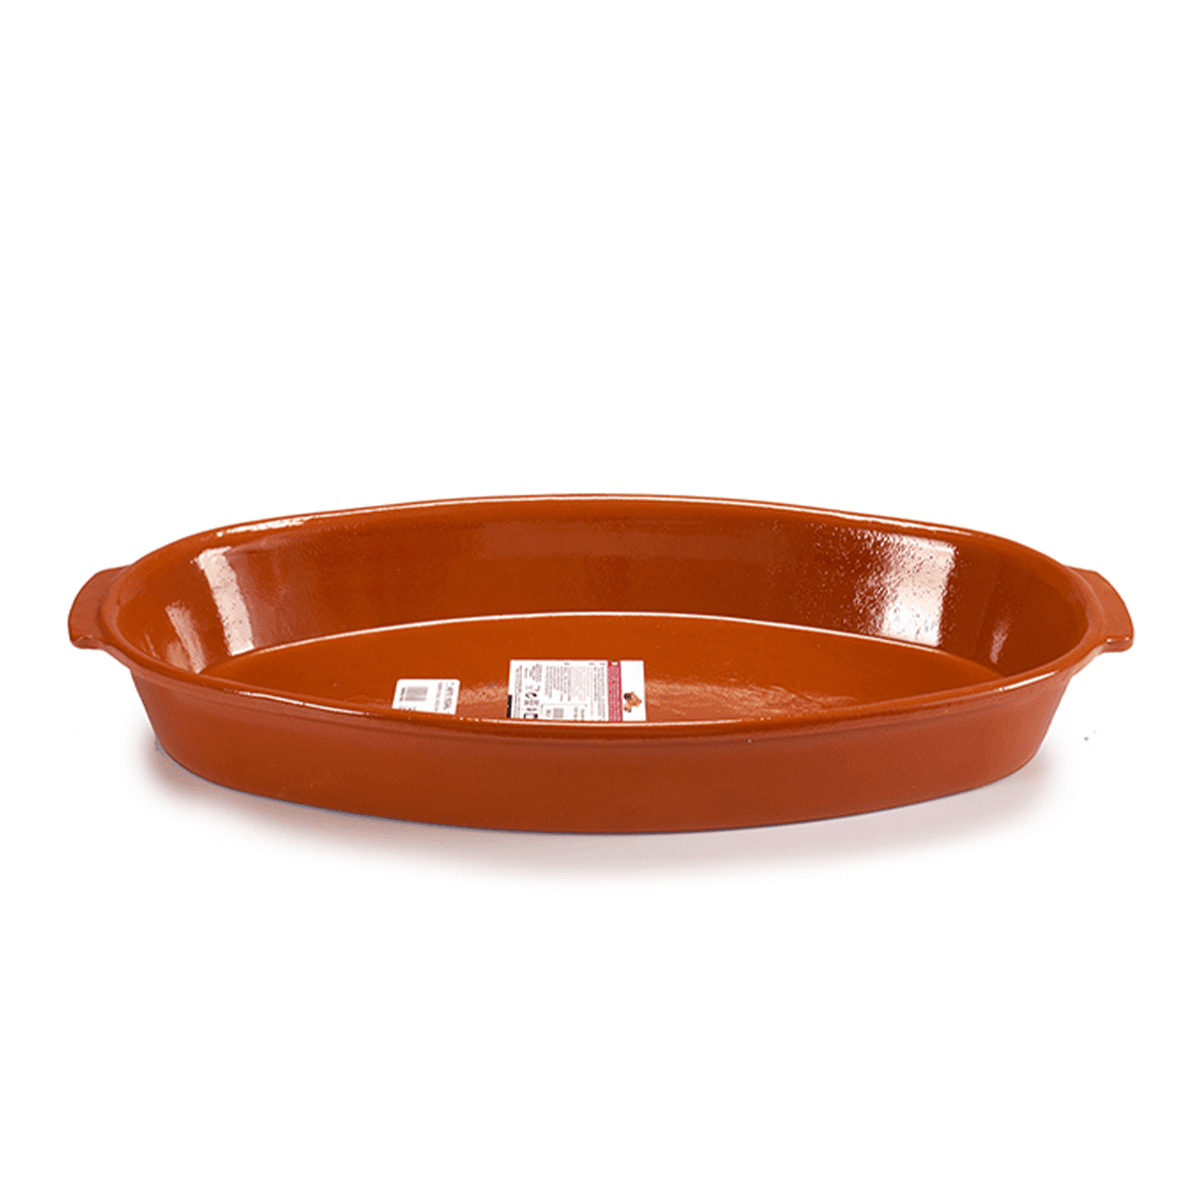 صحن فخار بيضاوي عميق لون بني 53 سم تيراكوتا من آرت ريجال صناعة اسبانيا Arte Regal Brown Clay Deep Oval Plate 53 cm